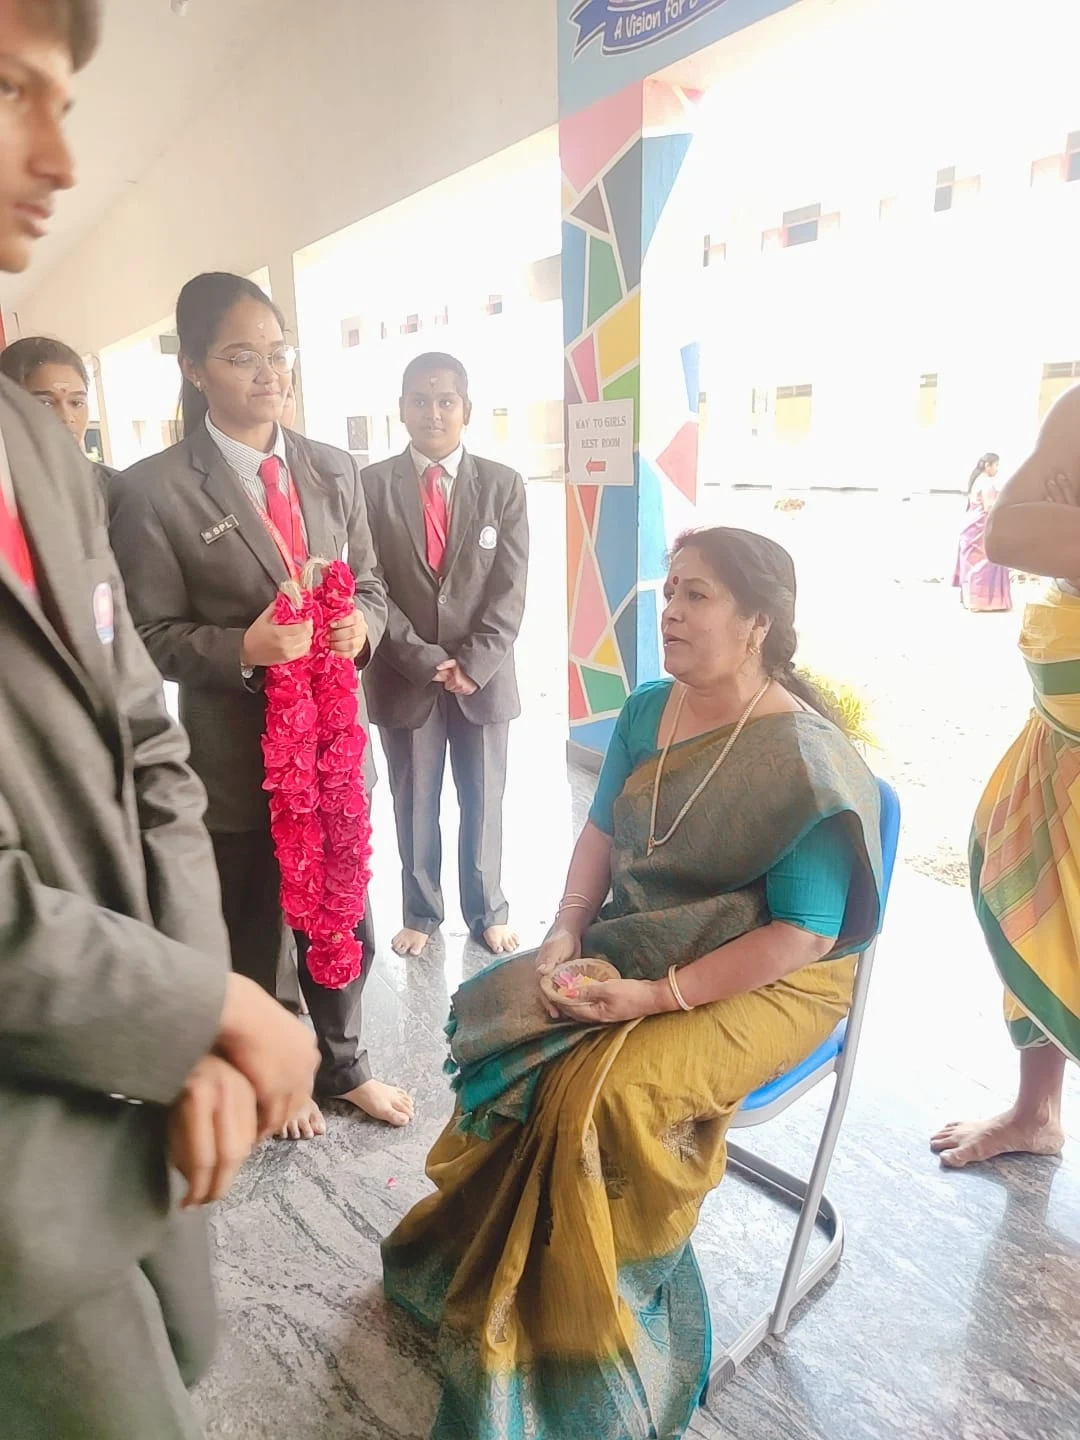 Sri Ambal Thulasi Public School - Patha Pooja 2022